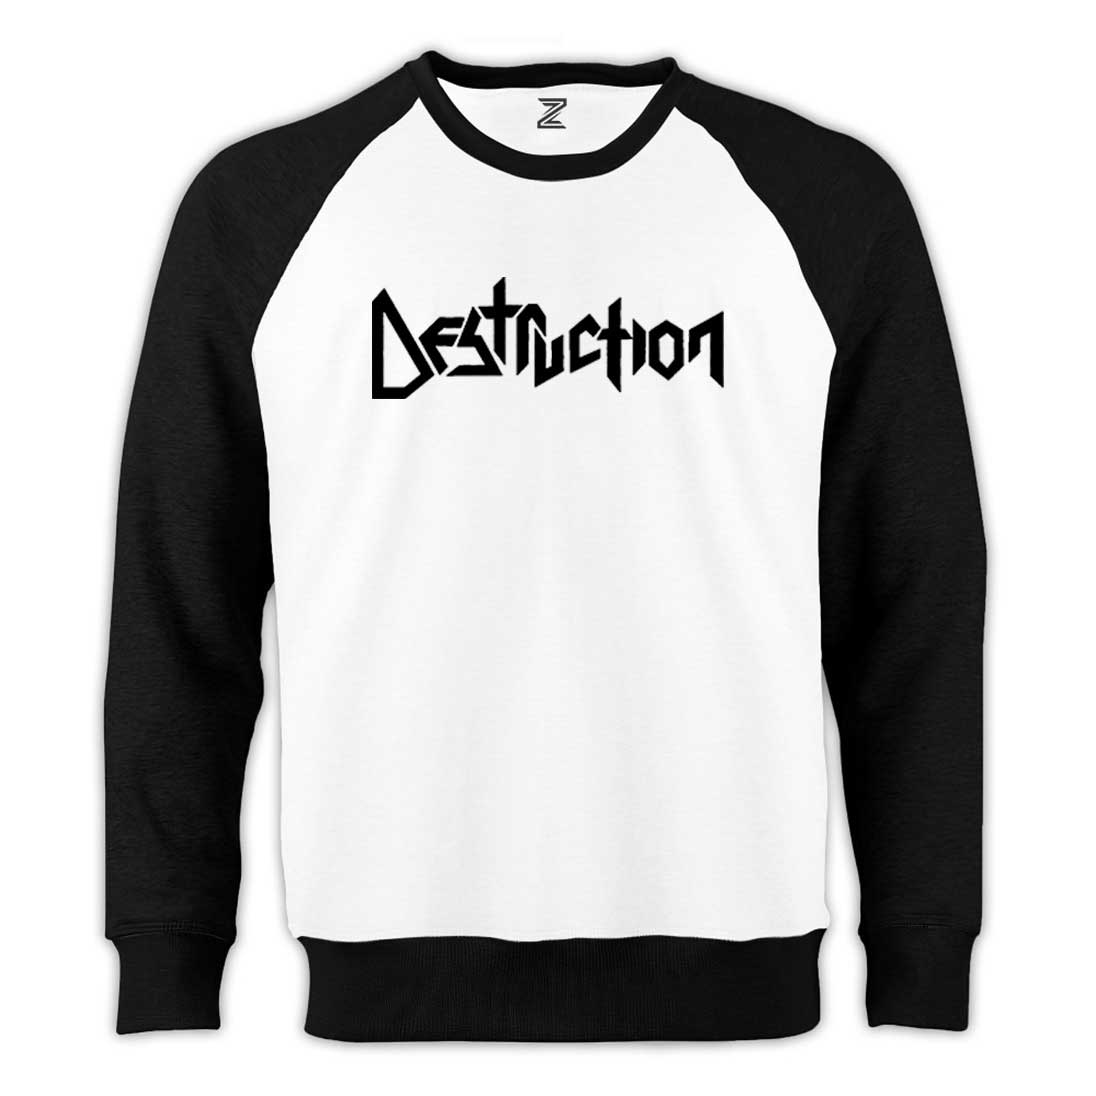 Destruction Text Reglan Kol Beyaz Sweatshirt